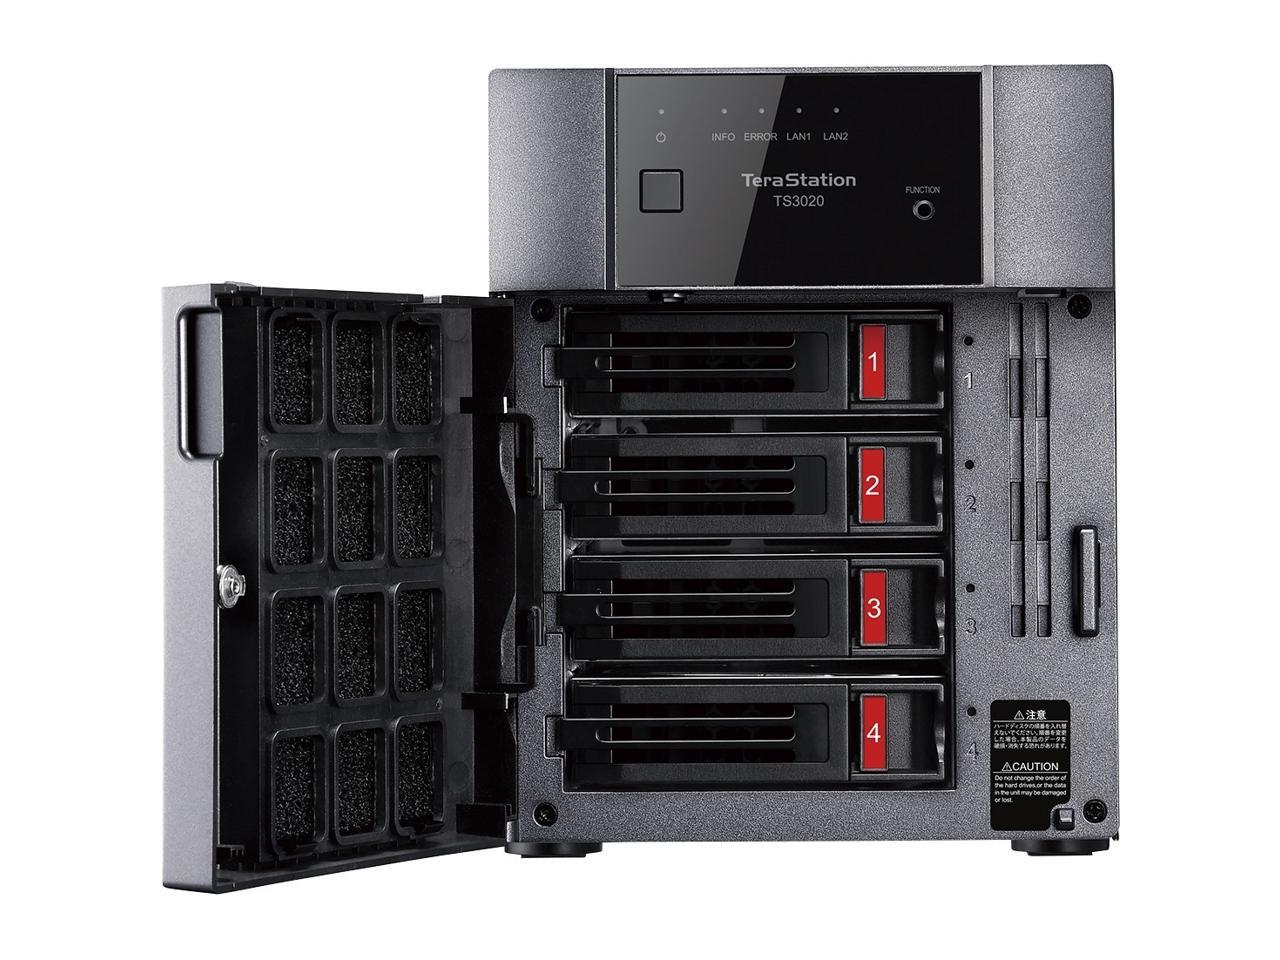 Buffalo TeraStation 3420DN Desktop 8 TB NAS Hard Drives Included TS3420DN0804